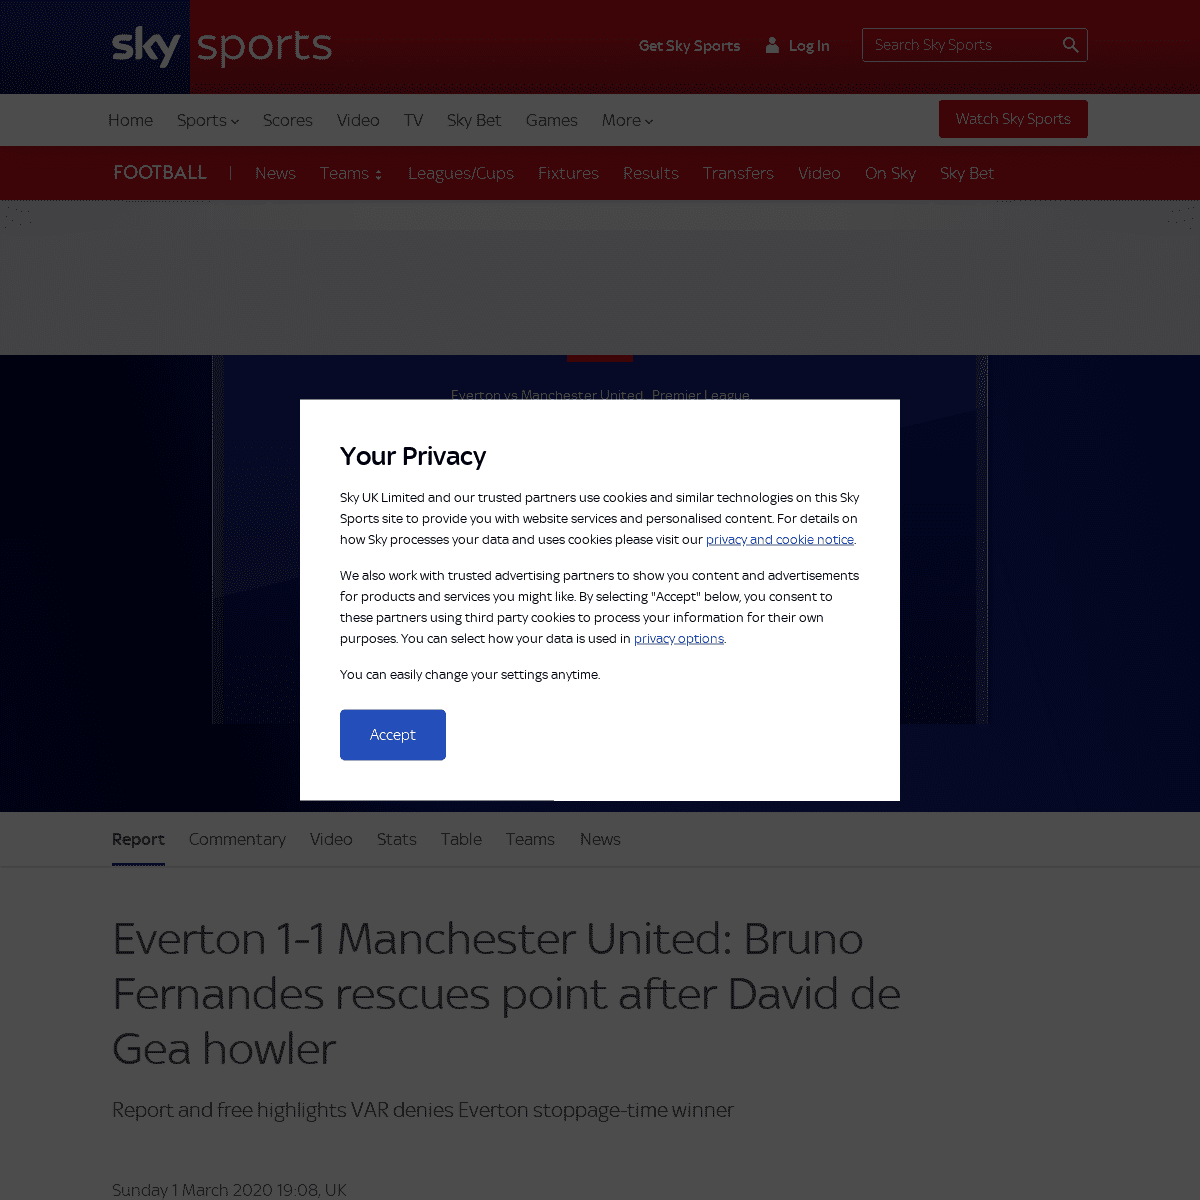 A complete backup of www.skysports.com/football/everton-vs-man-utd/report/408254